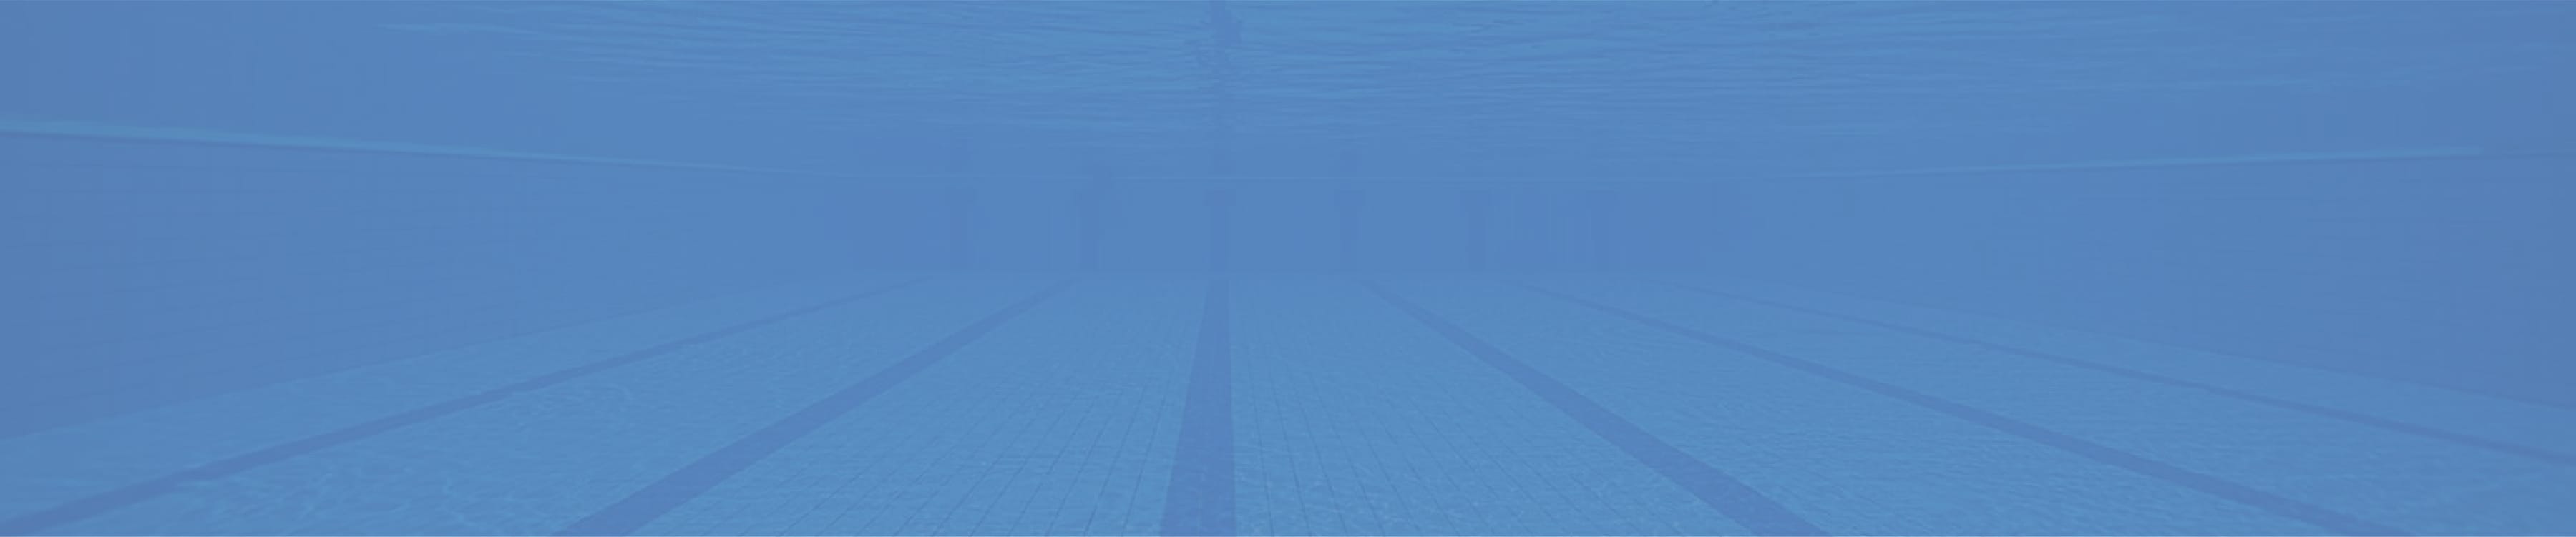 Princeton University – Dillon Gymnasium Swimming Pool (Audit)